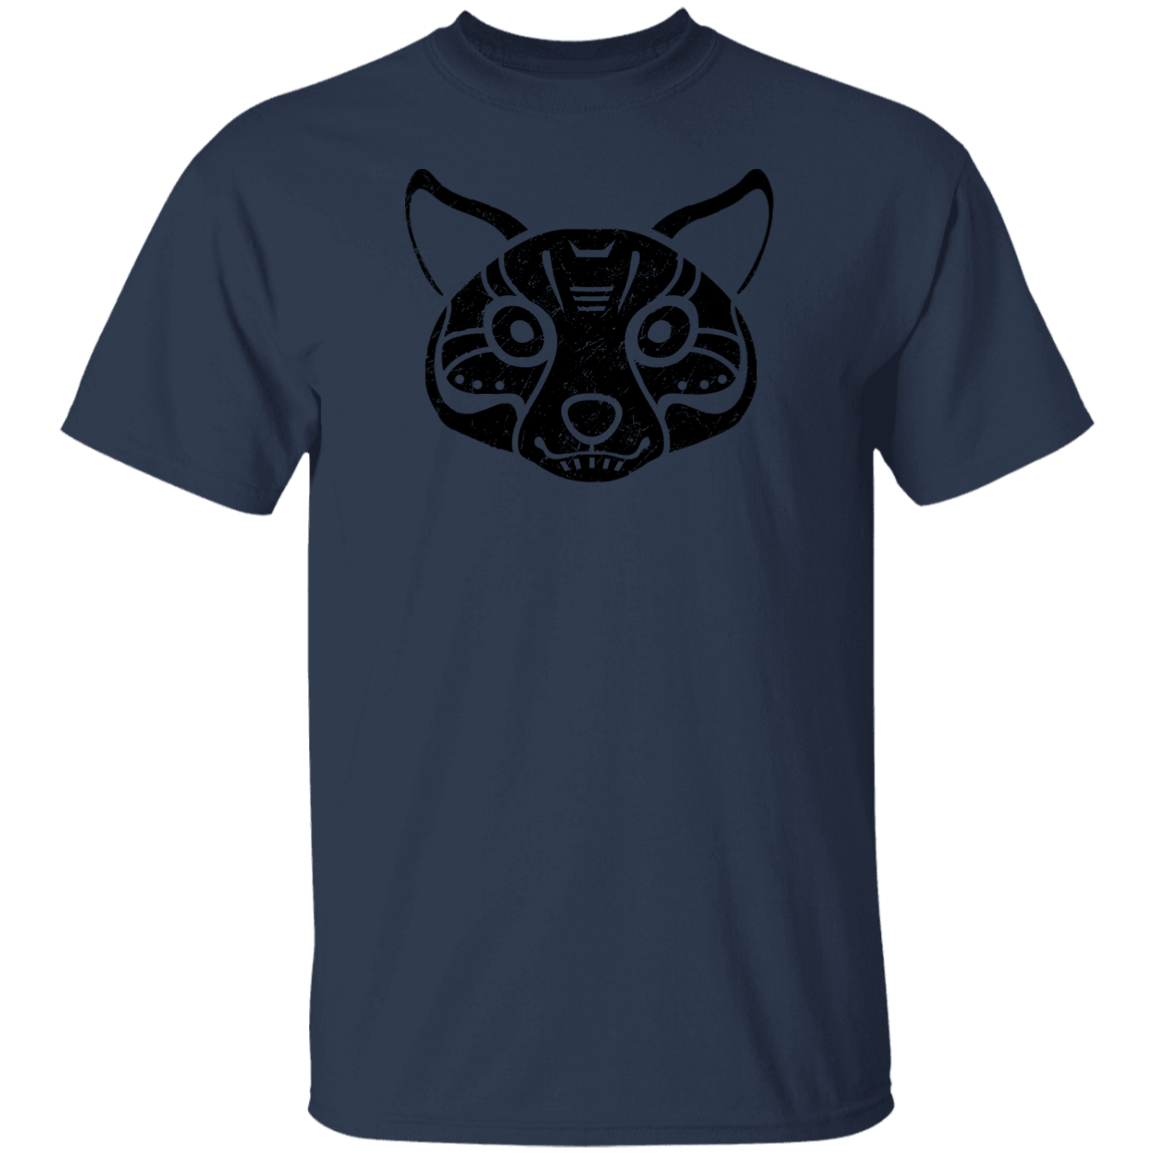 Black Distressed Emblem T-Shirt for Kids (Coyote/Coy)